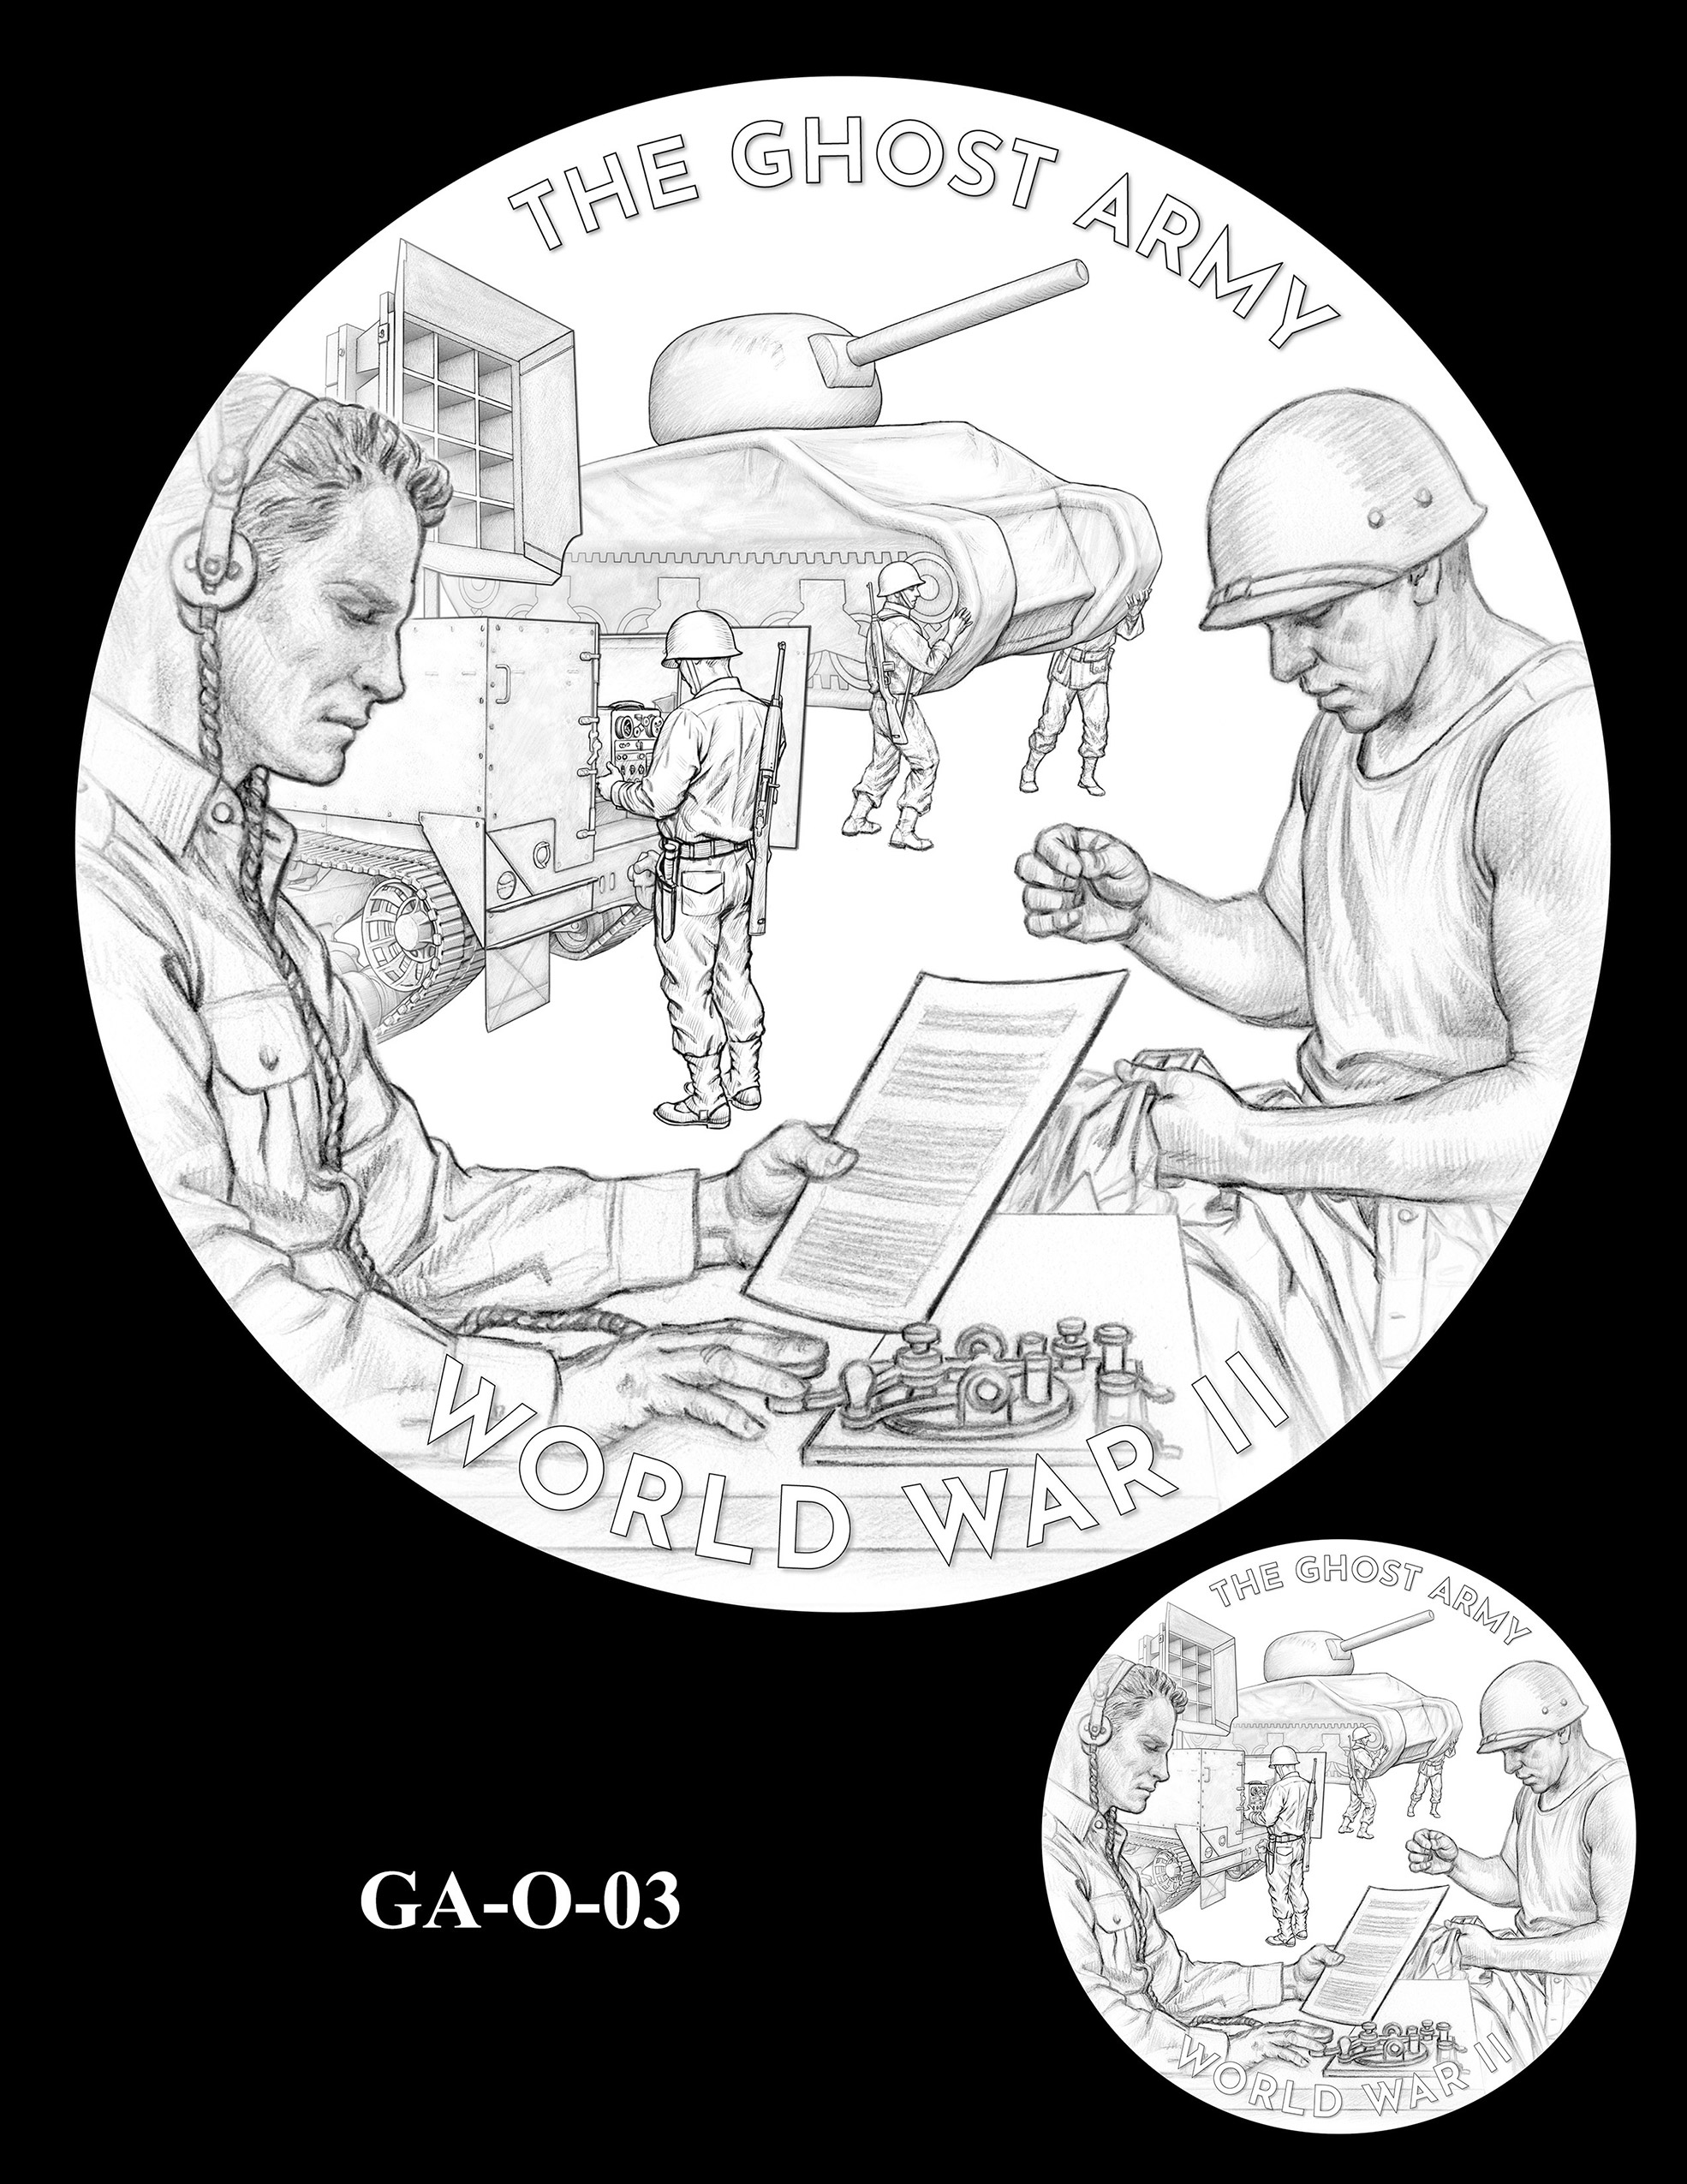 GA-O-03 -- Ghost Army Congressional Gold Medal